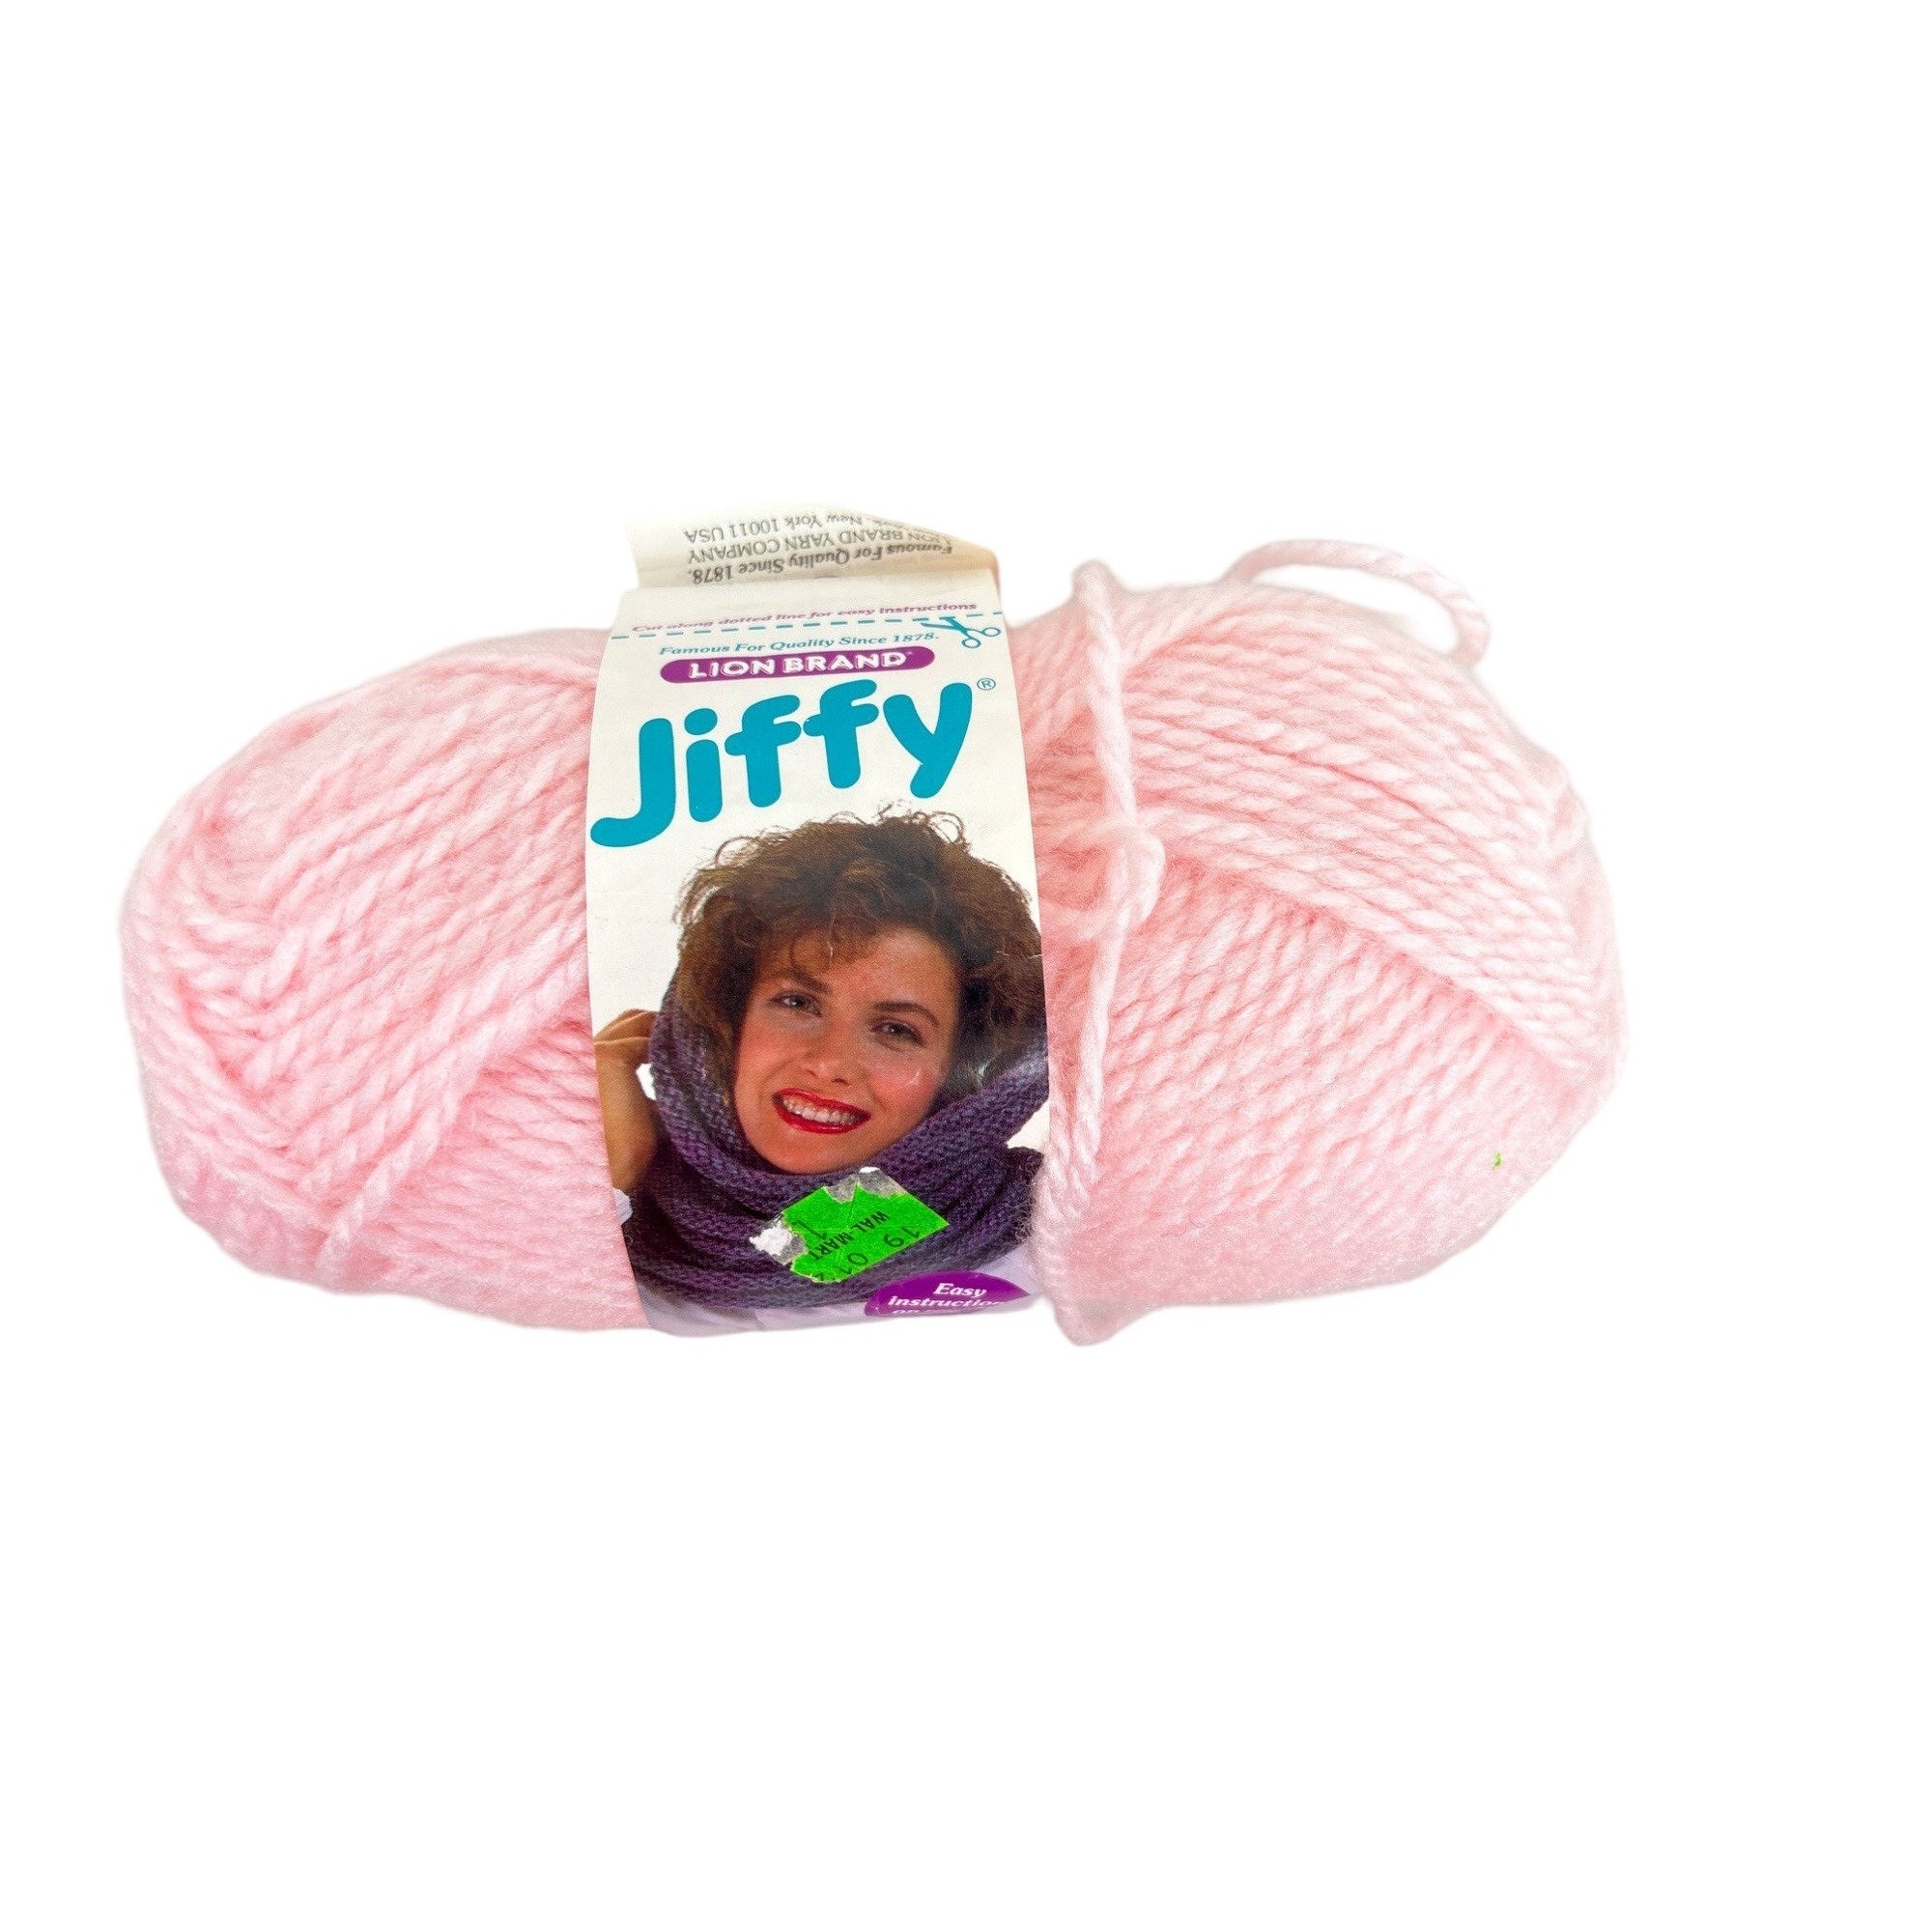 Lion Brand Jiffy Yarn 101 Light Pink Acrylic 3 Oz AT160 